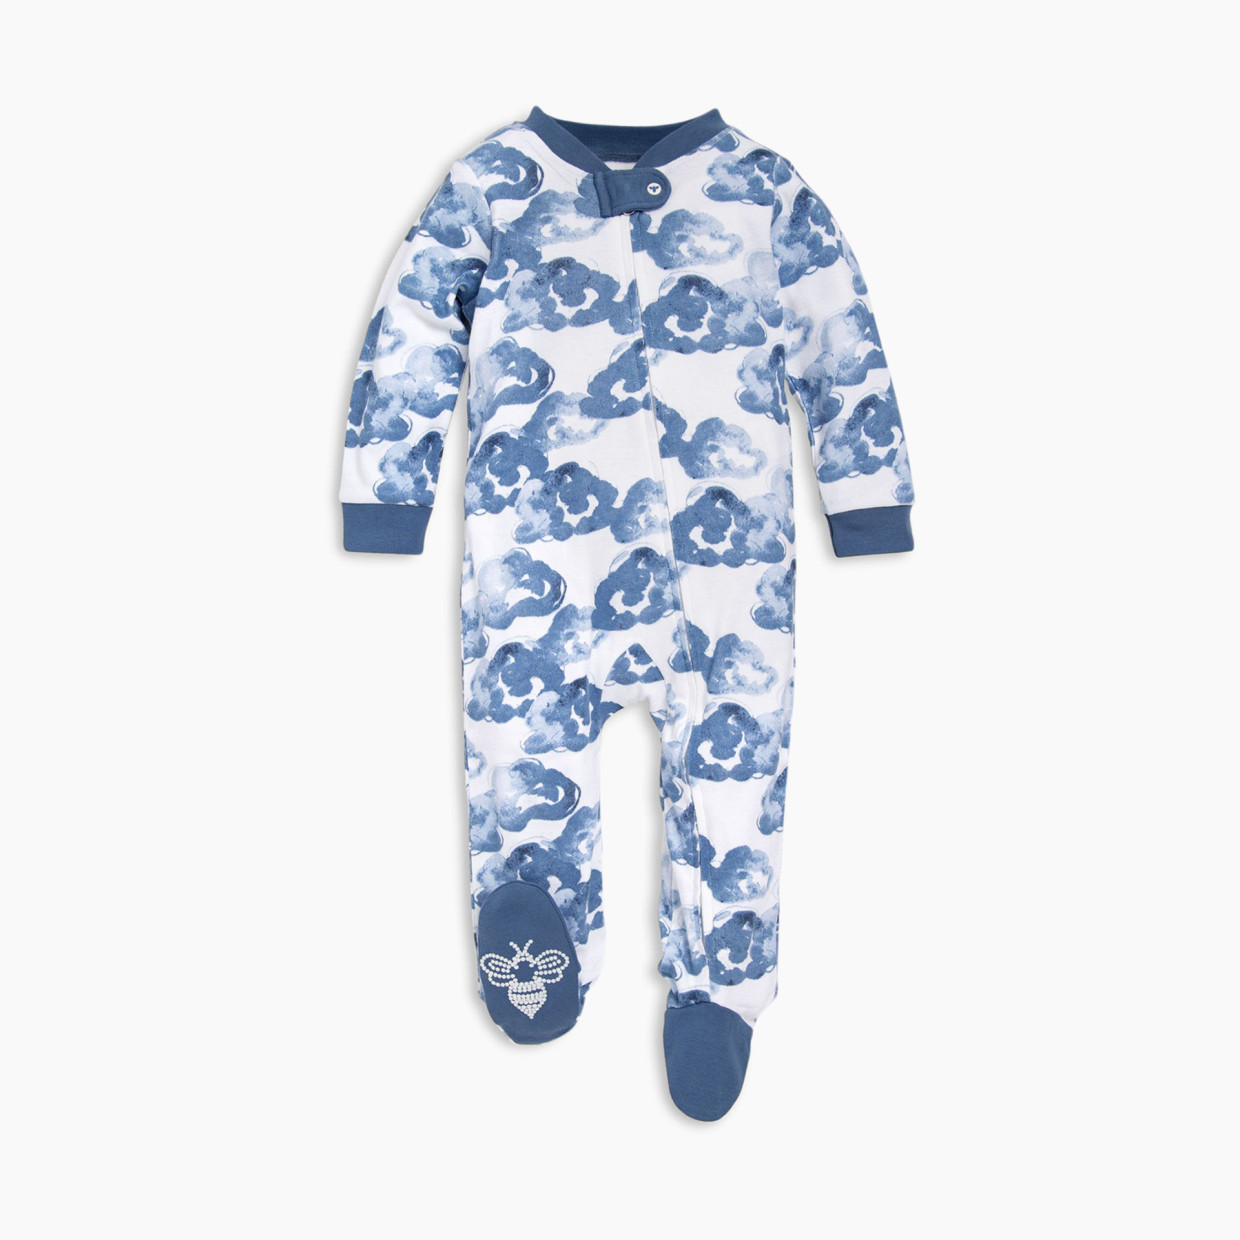 Burt's Bees Baby Organic Sleep & Play Footie Pajamas - Moonlight Clouds, 3-6 Months.